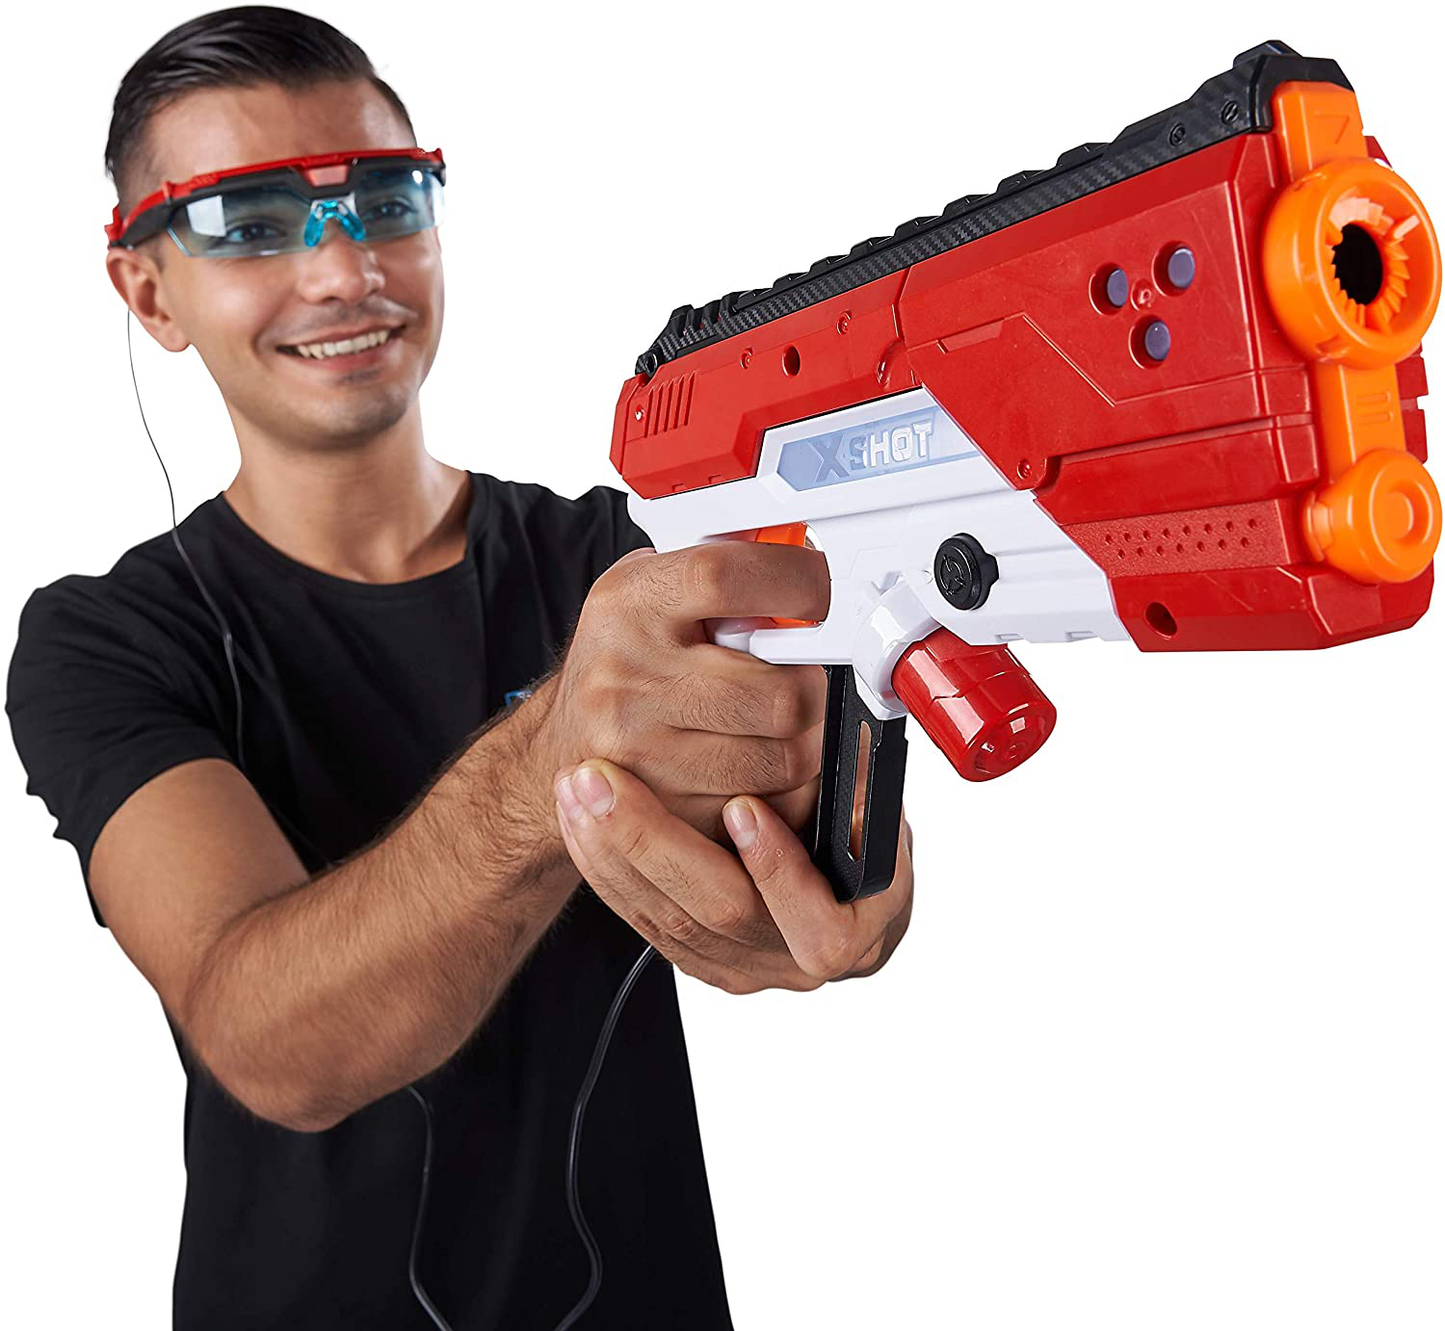 Xshot Laser Tag - 4 Laser Tag Guns & 360° Sensor Goggles - Ultimate Laser Blaster Party Pack for Outdoor or Indoor Fun